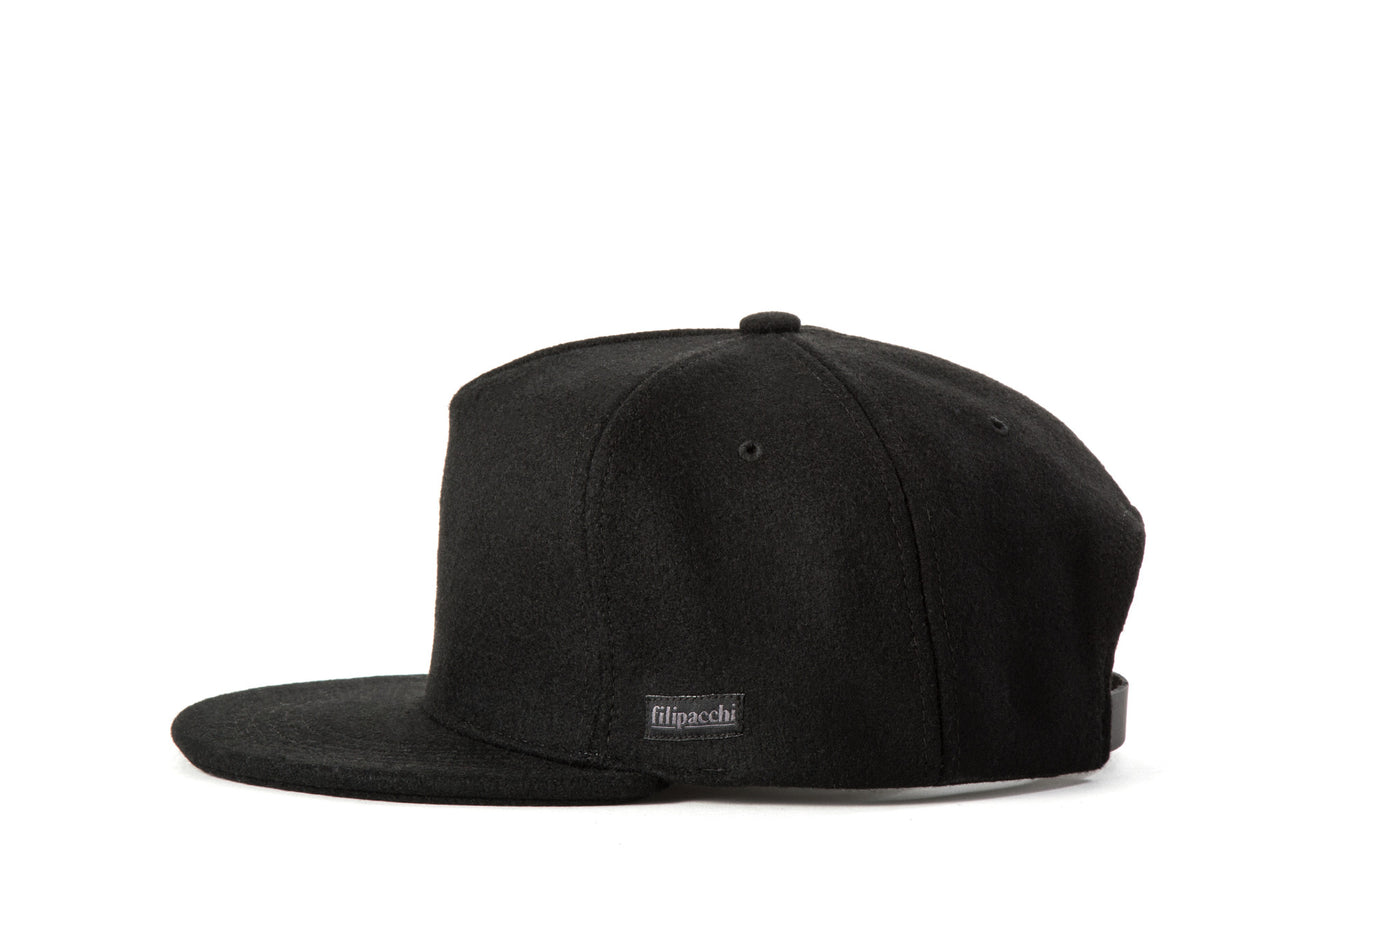 Filipacchi Black Wool Trucker Hat